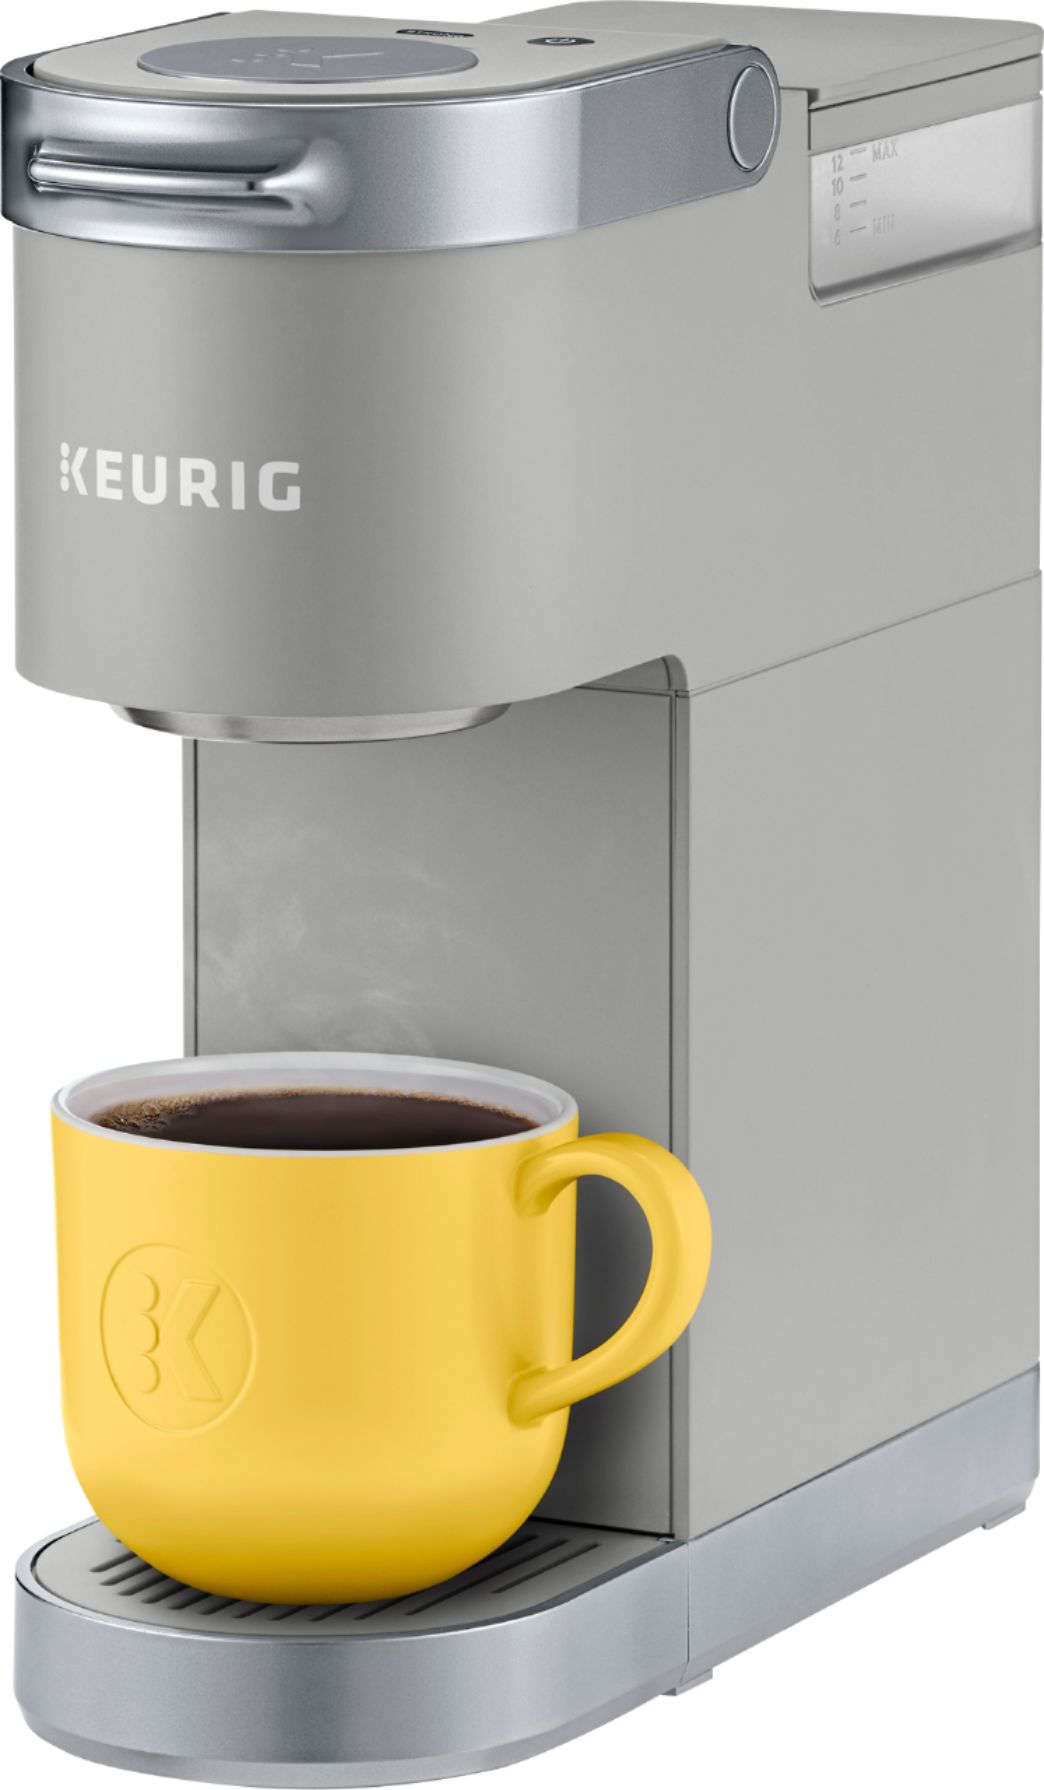 KEURIG MINI COFFEE MACHINE + KCUPS +TUMBLERS - appliances - by owner - sale  - craigslist